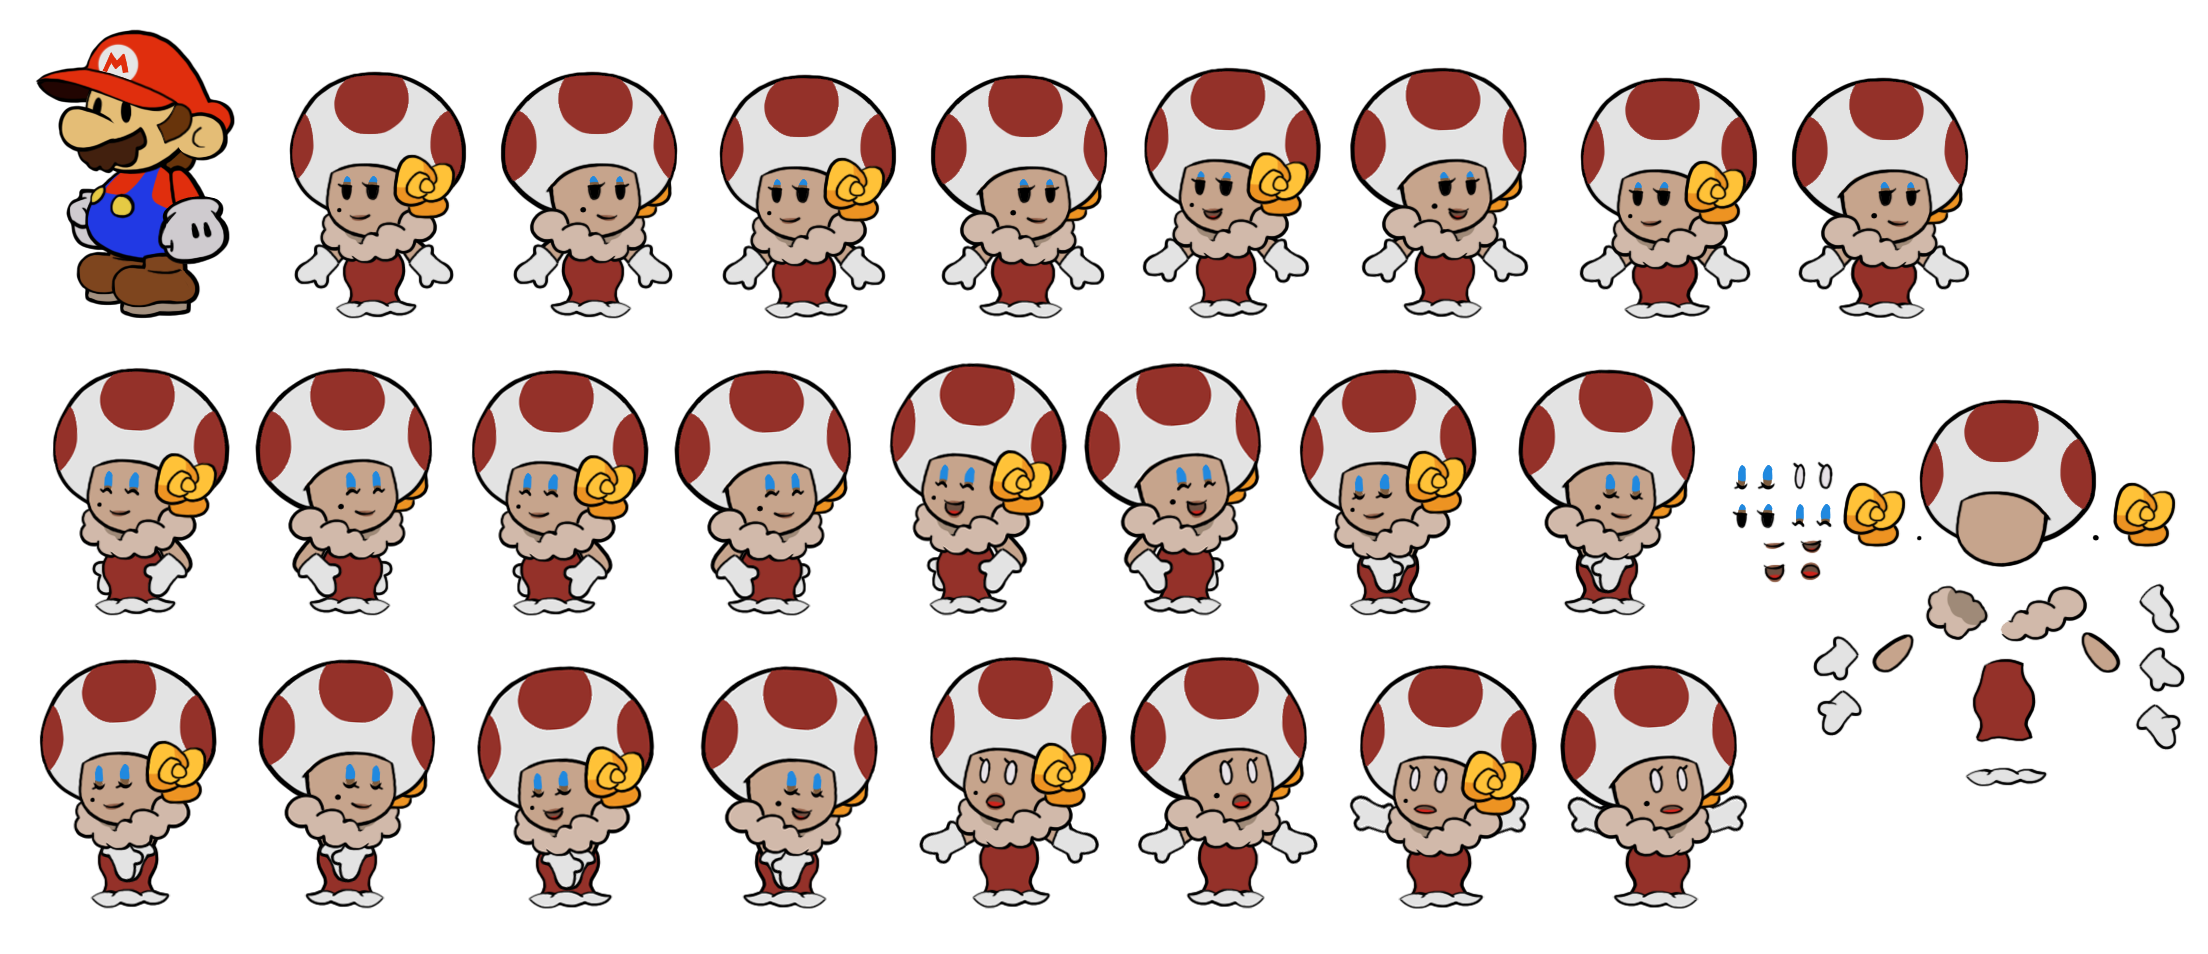 Paper Mario Customs - Toodles (Paper Mario-Style)